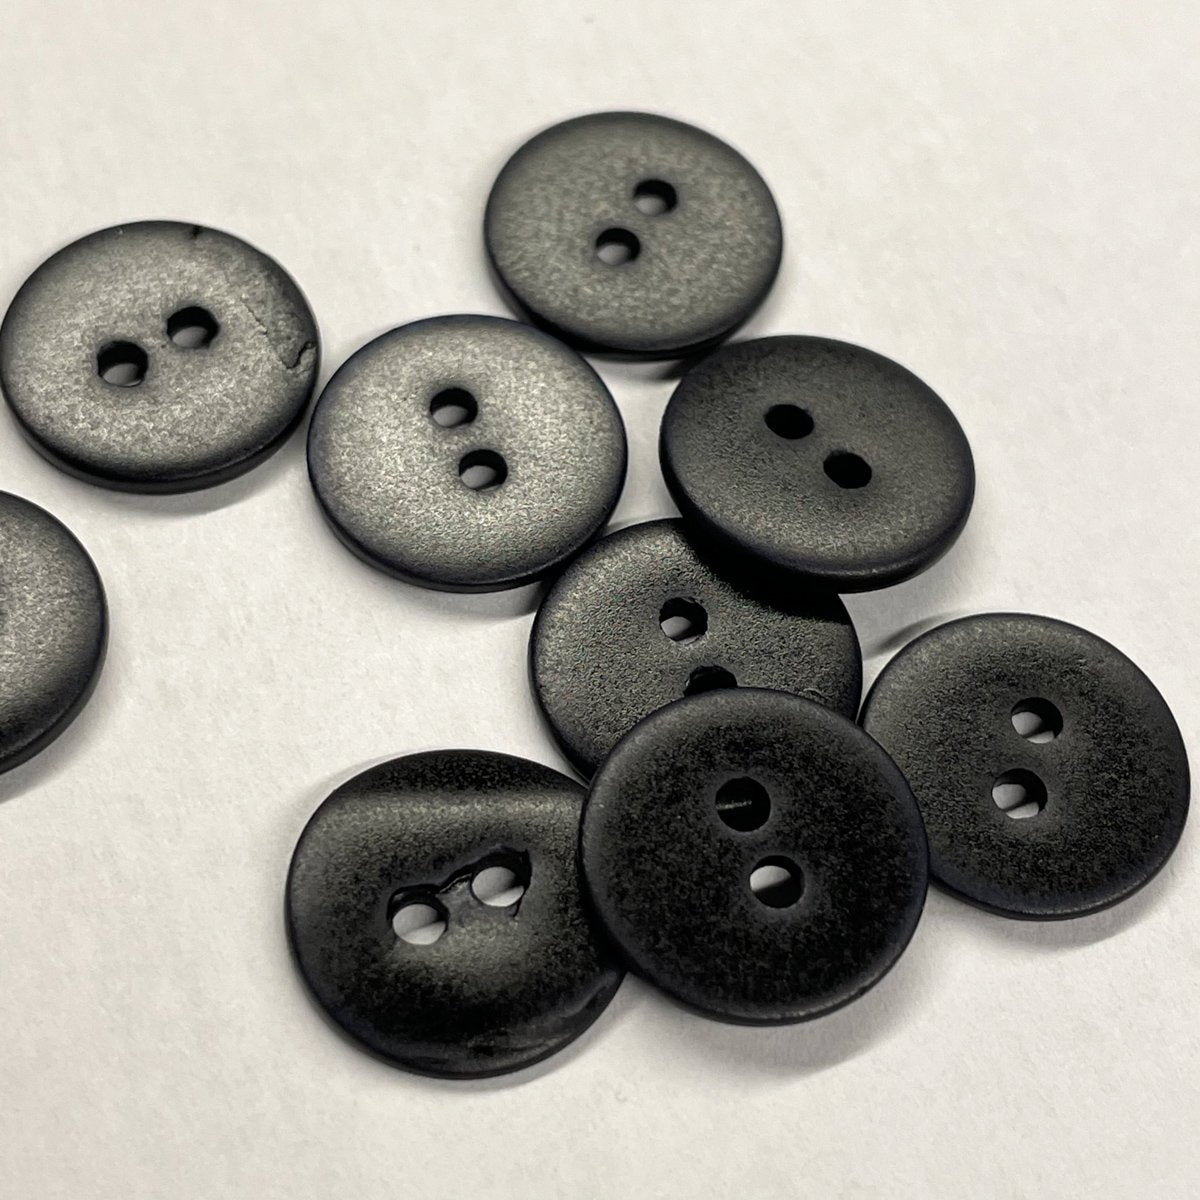 Matte shell buttons (sold by unit) - Dark navy - 10mm, 12mm et 15mm